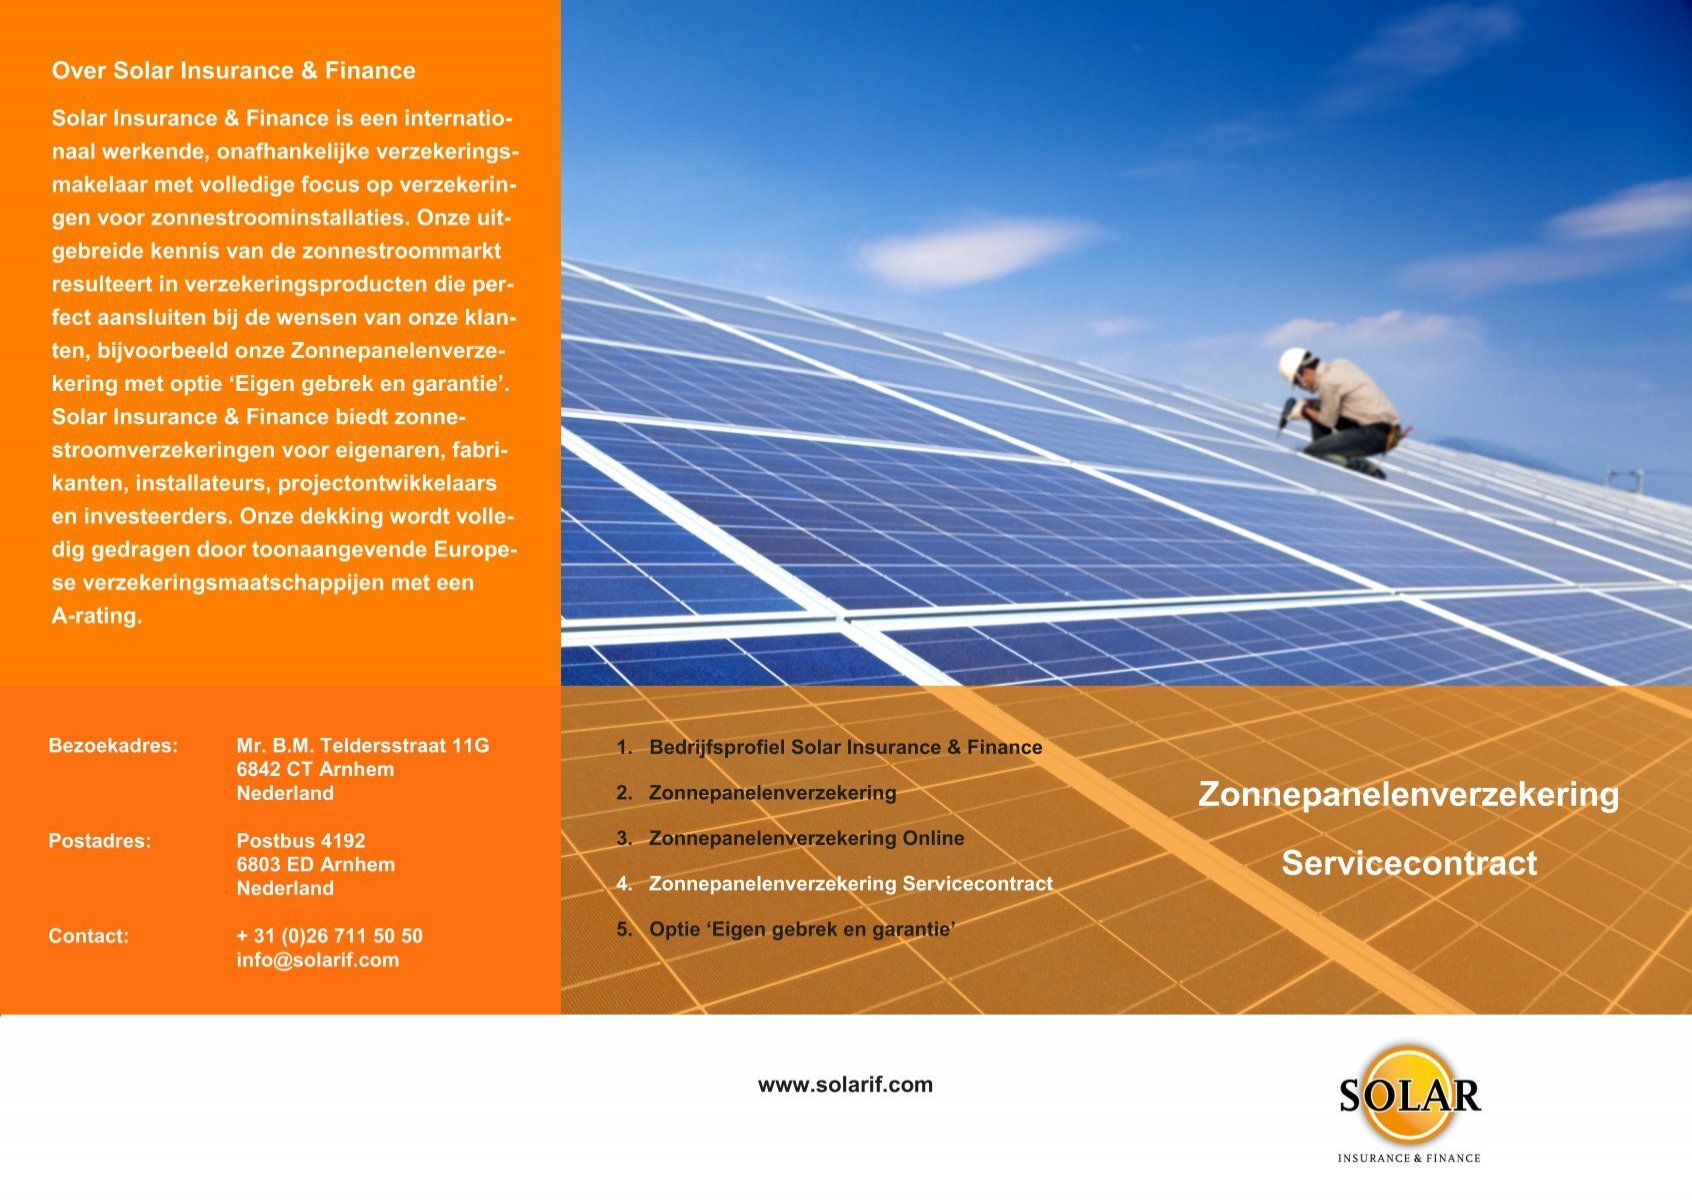 solar-insurance-finance-zonnepanelenverzekering-servicecontract